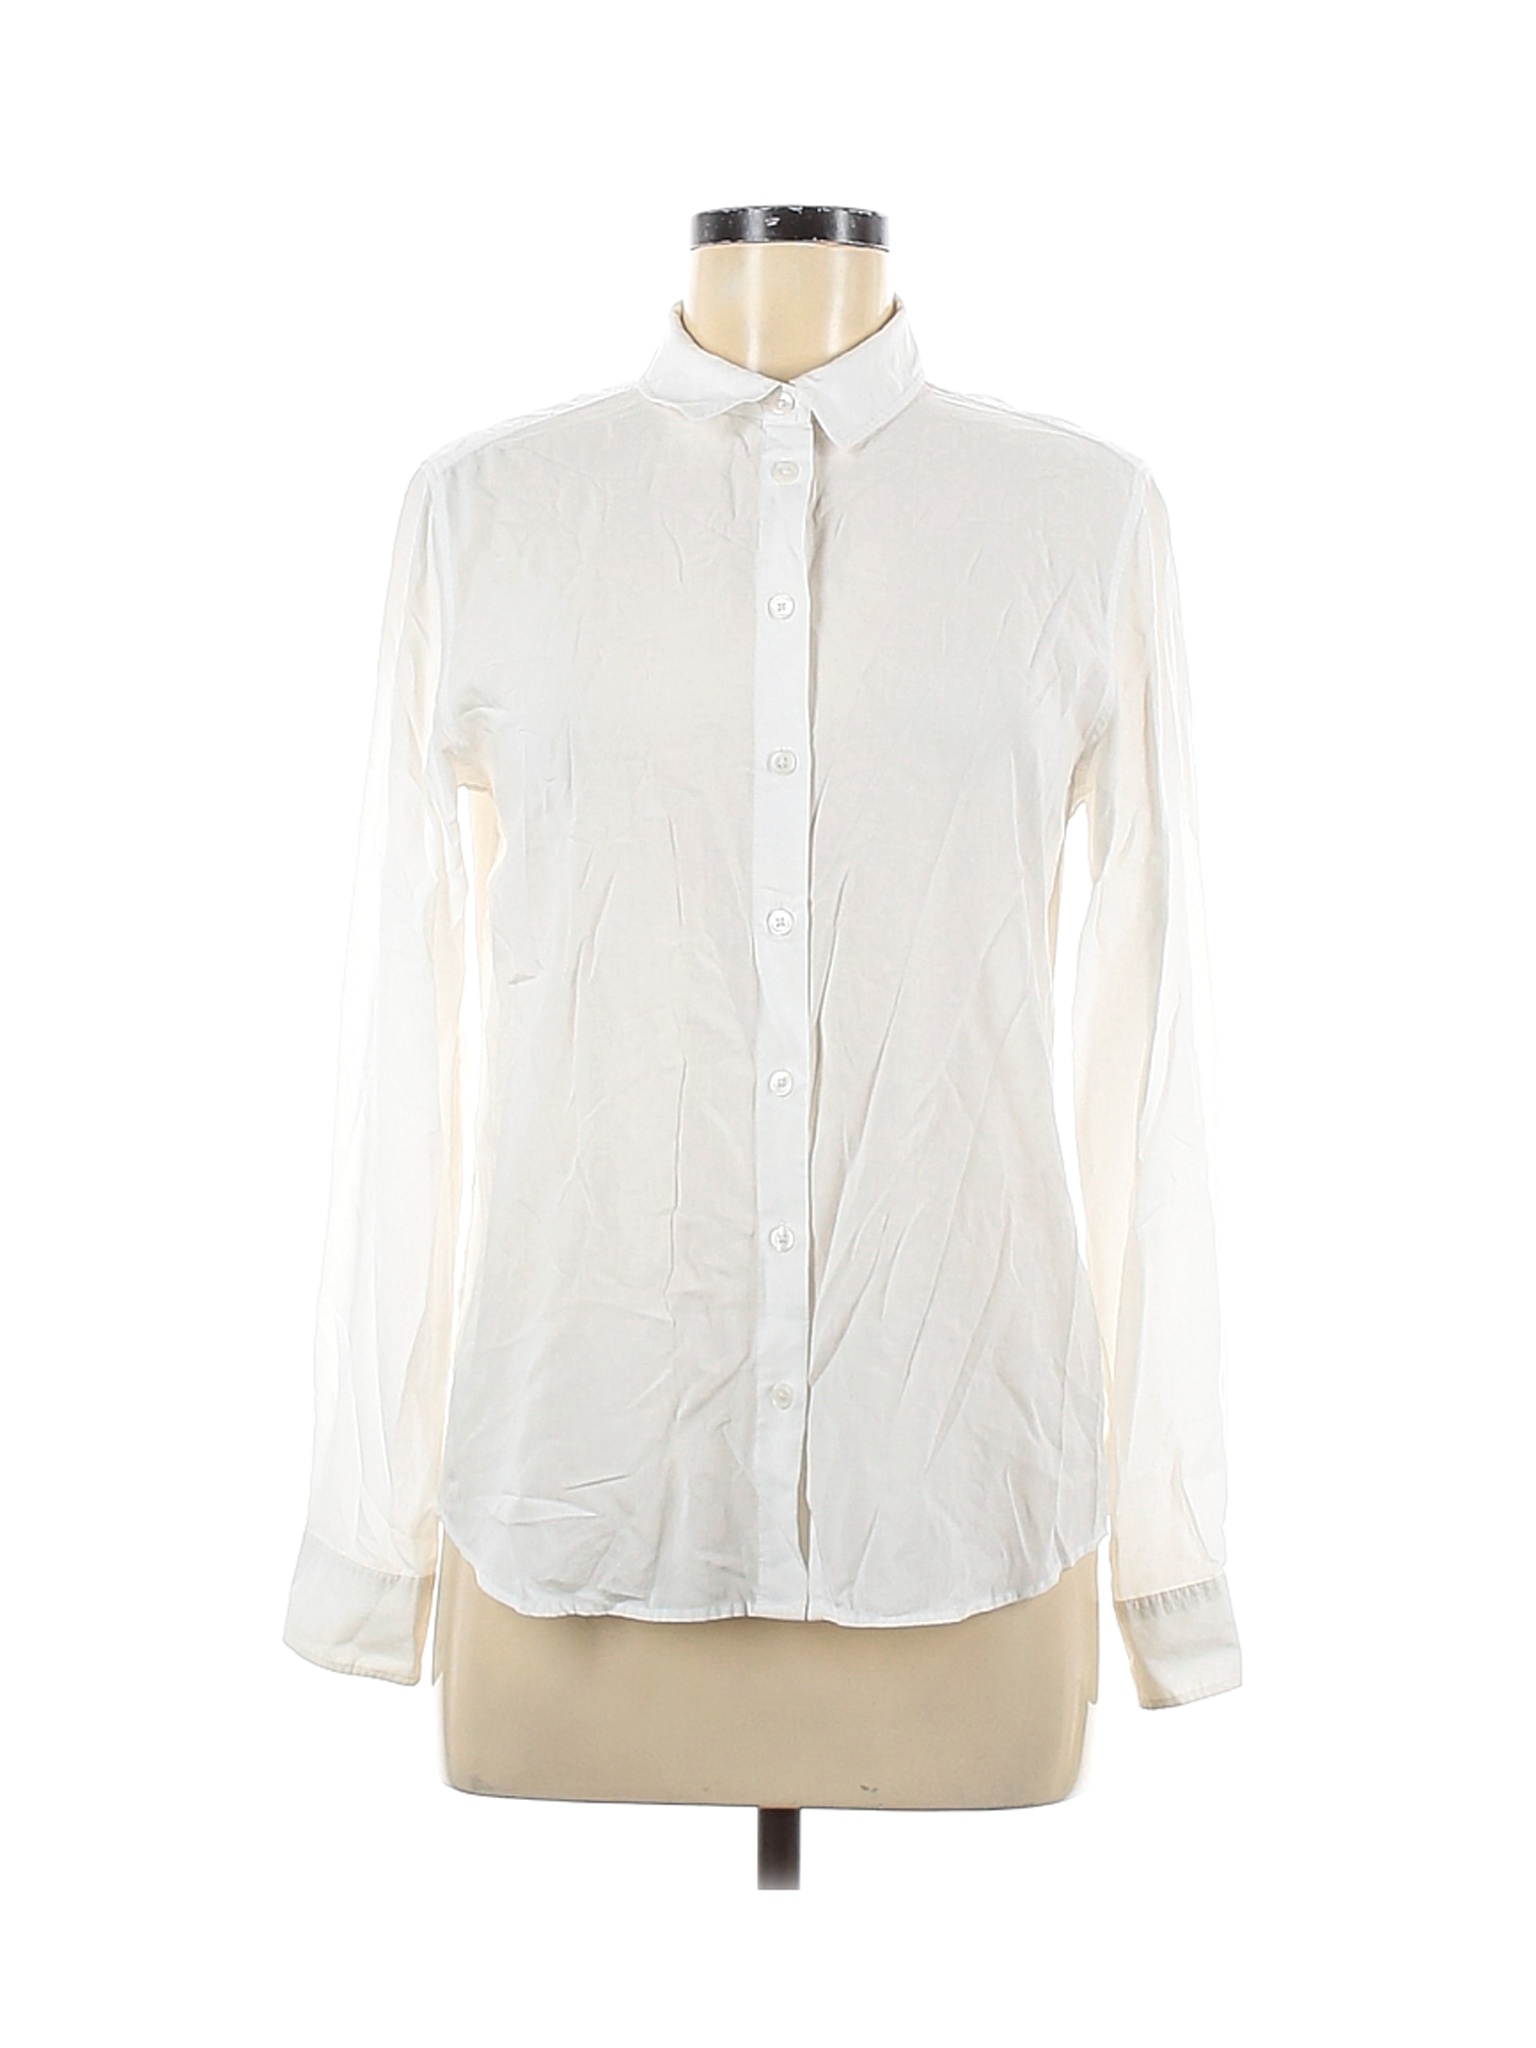 Uniqlo Women White Long Sleeve Button-Down Shirt M | eBay